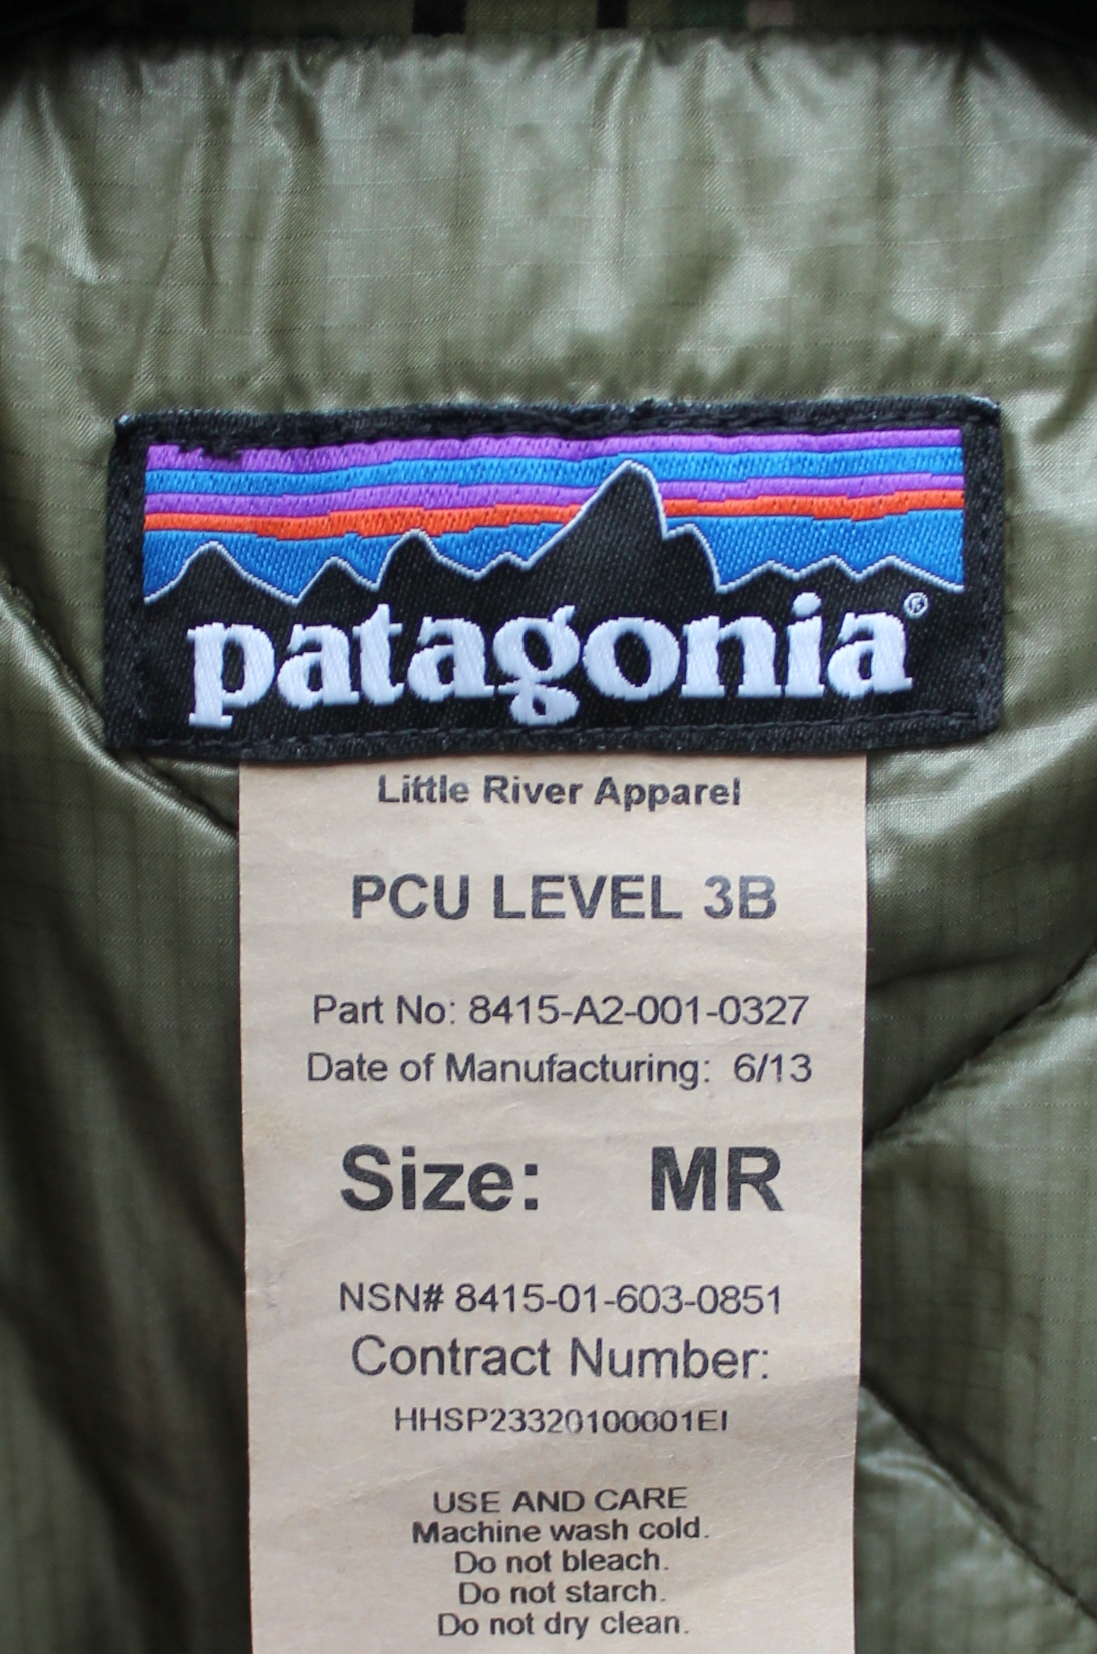 Patagonia Pcu Level 3b Jacket The Full 9